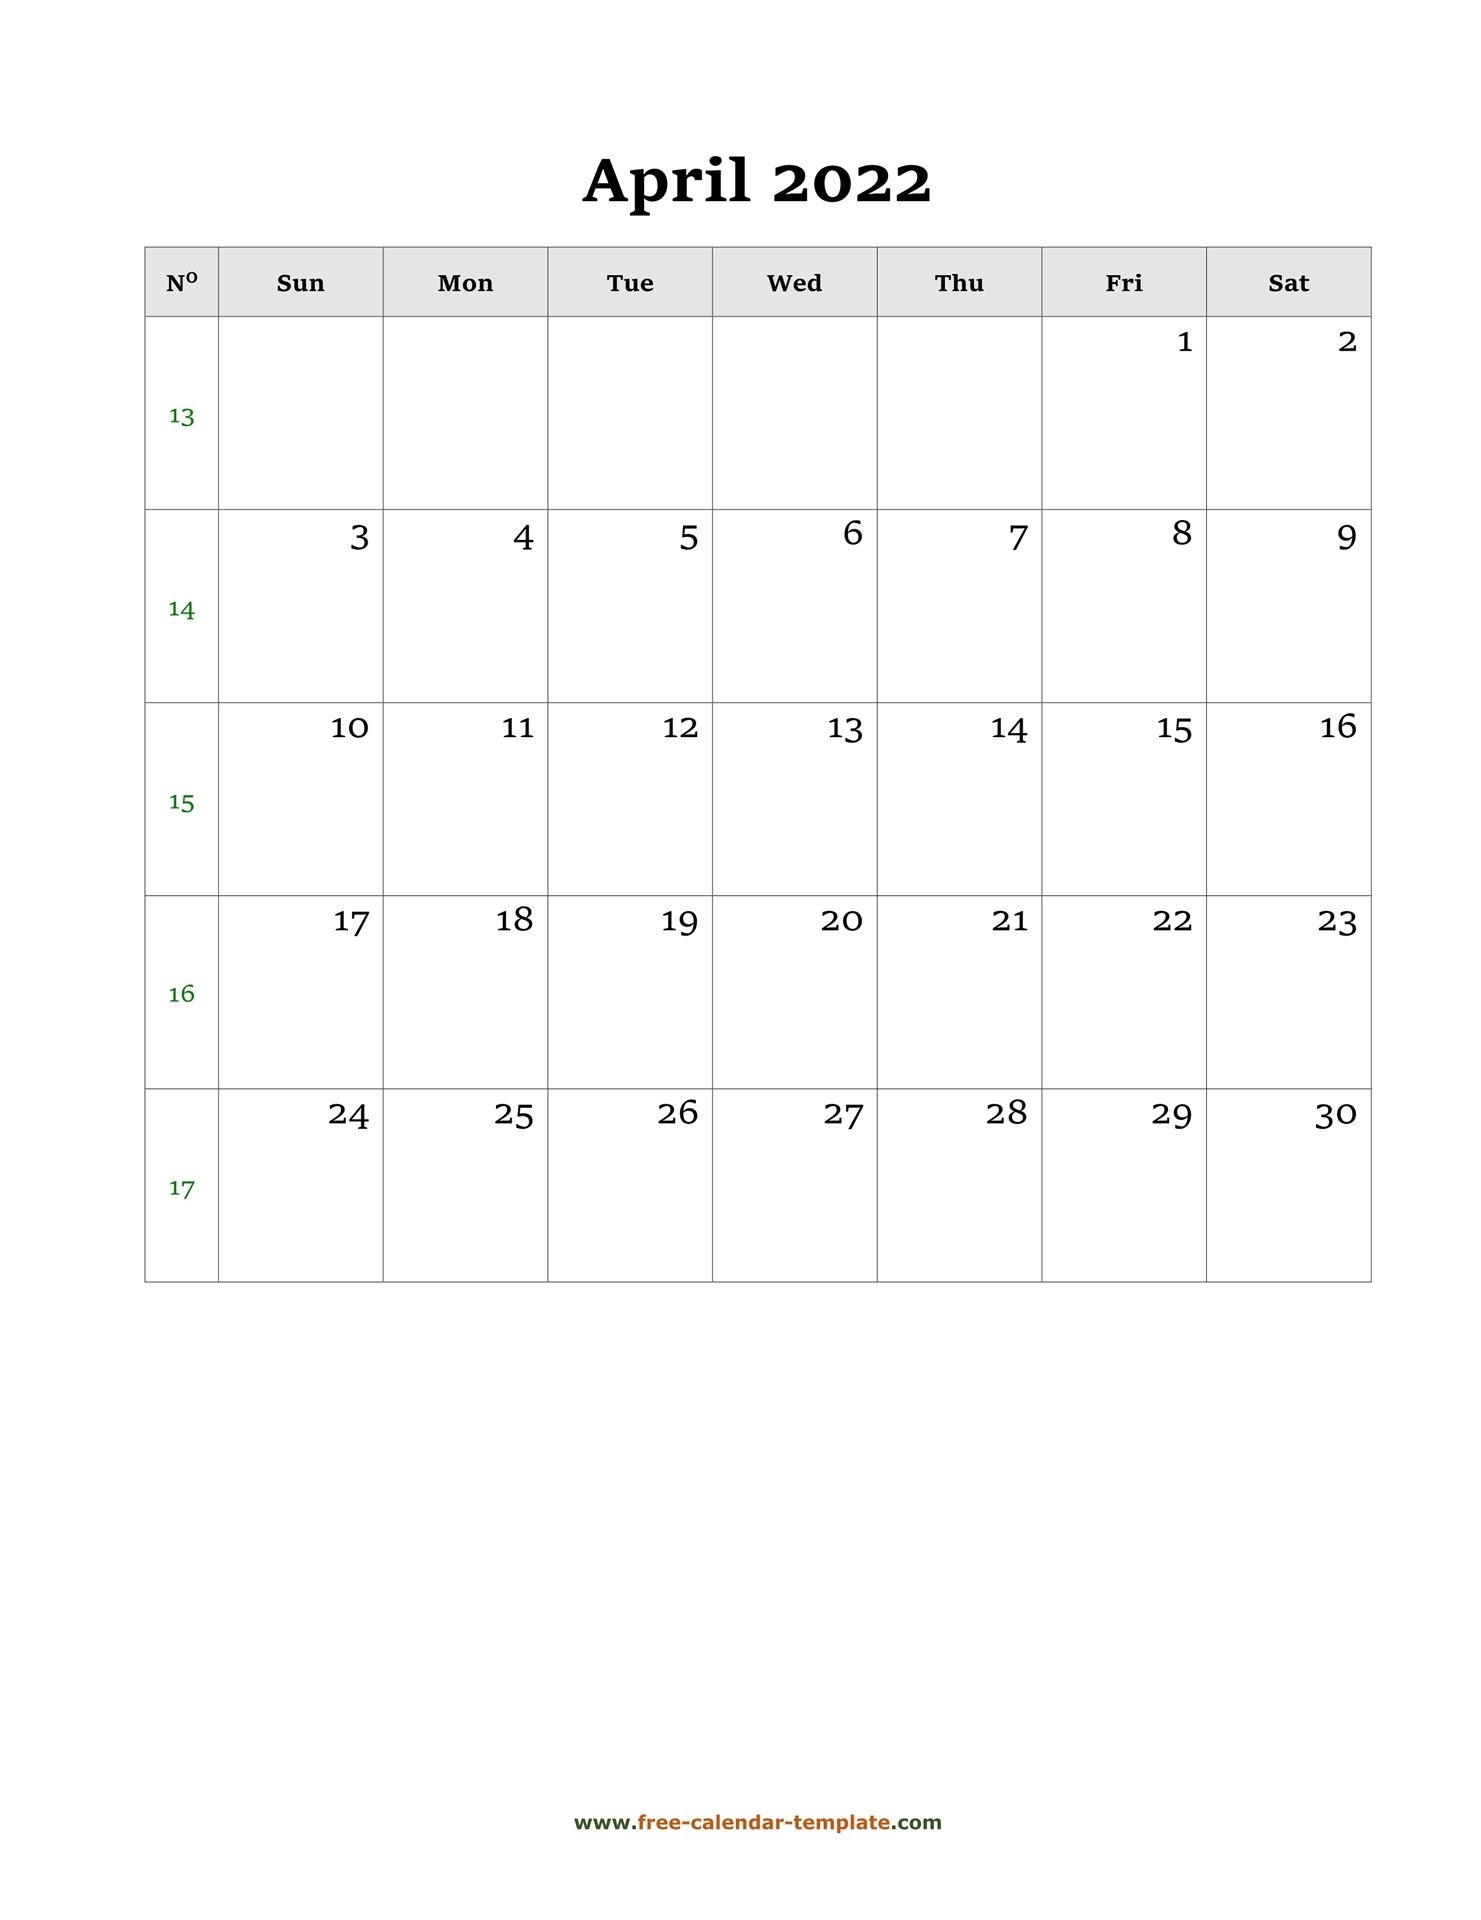 april calendar 2022 simple design with large box on each